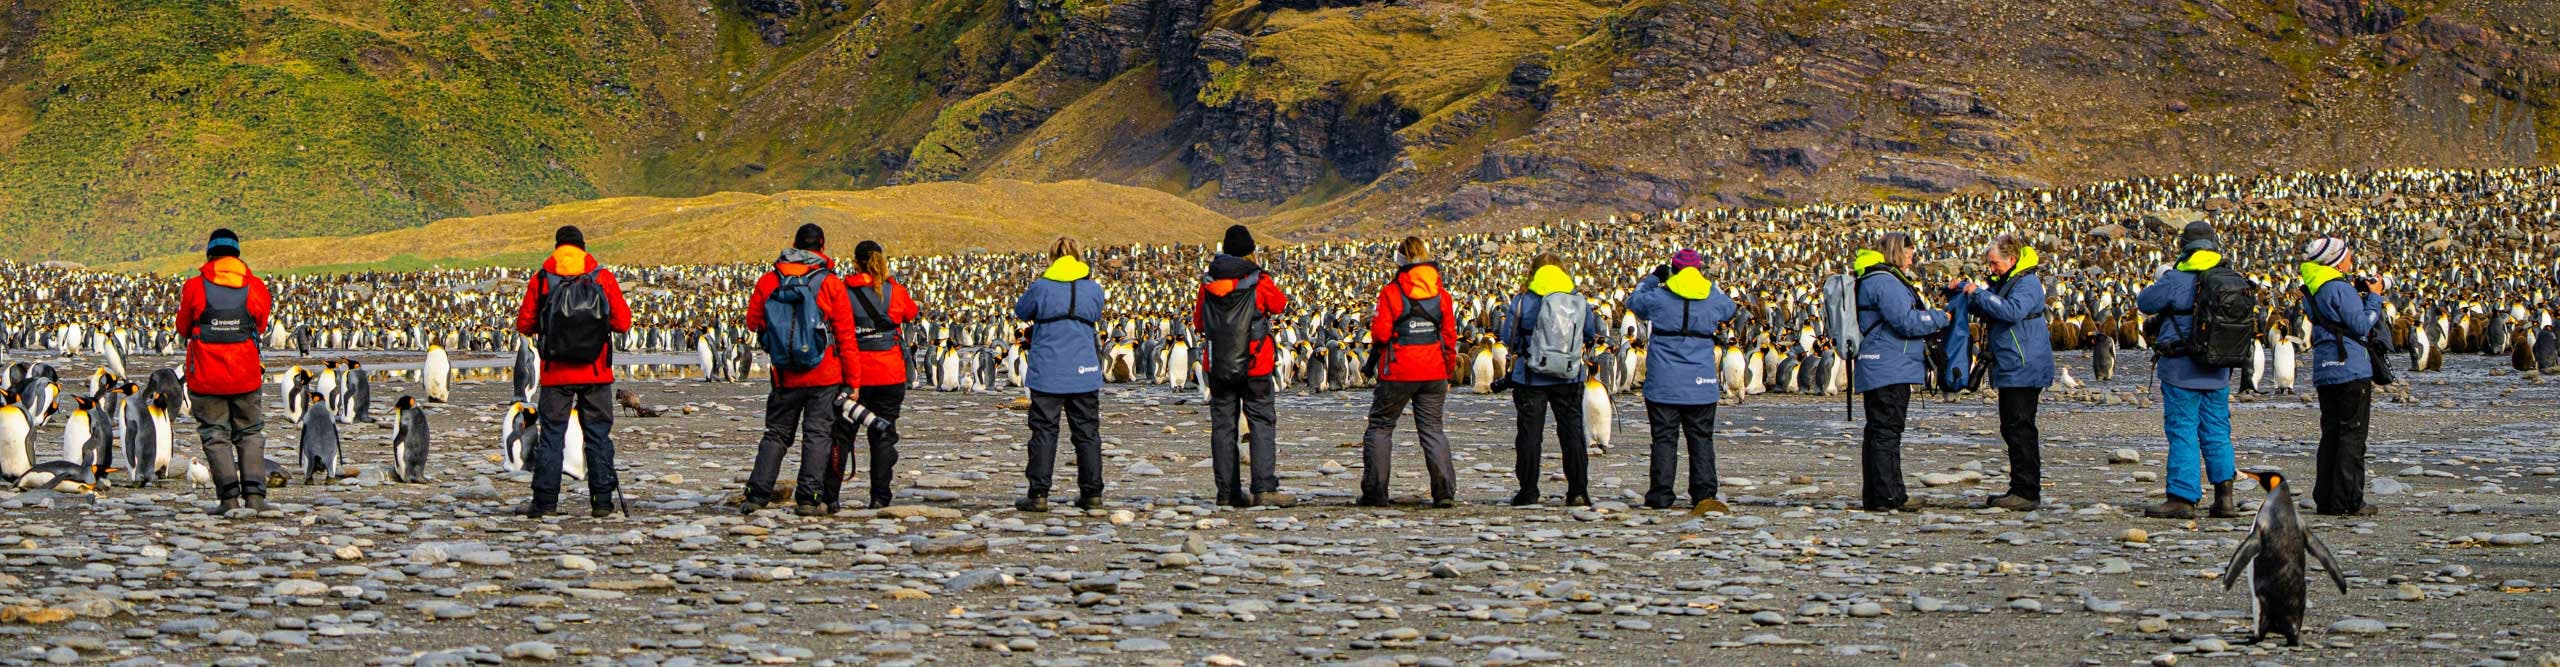 Intrepid Travel Antarctica OE3 Falkland Islands Tour Group Penguins 42 2560  ?width=2560&crop=2560%2C667%2Coffset X50%2Coffset Y50&quality=75&format=pjpg&auto=webp